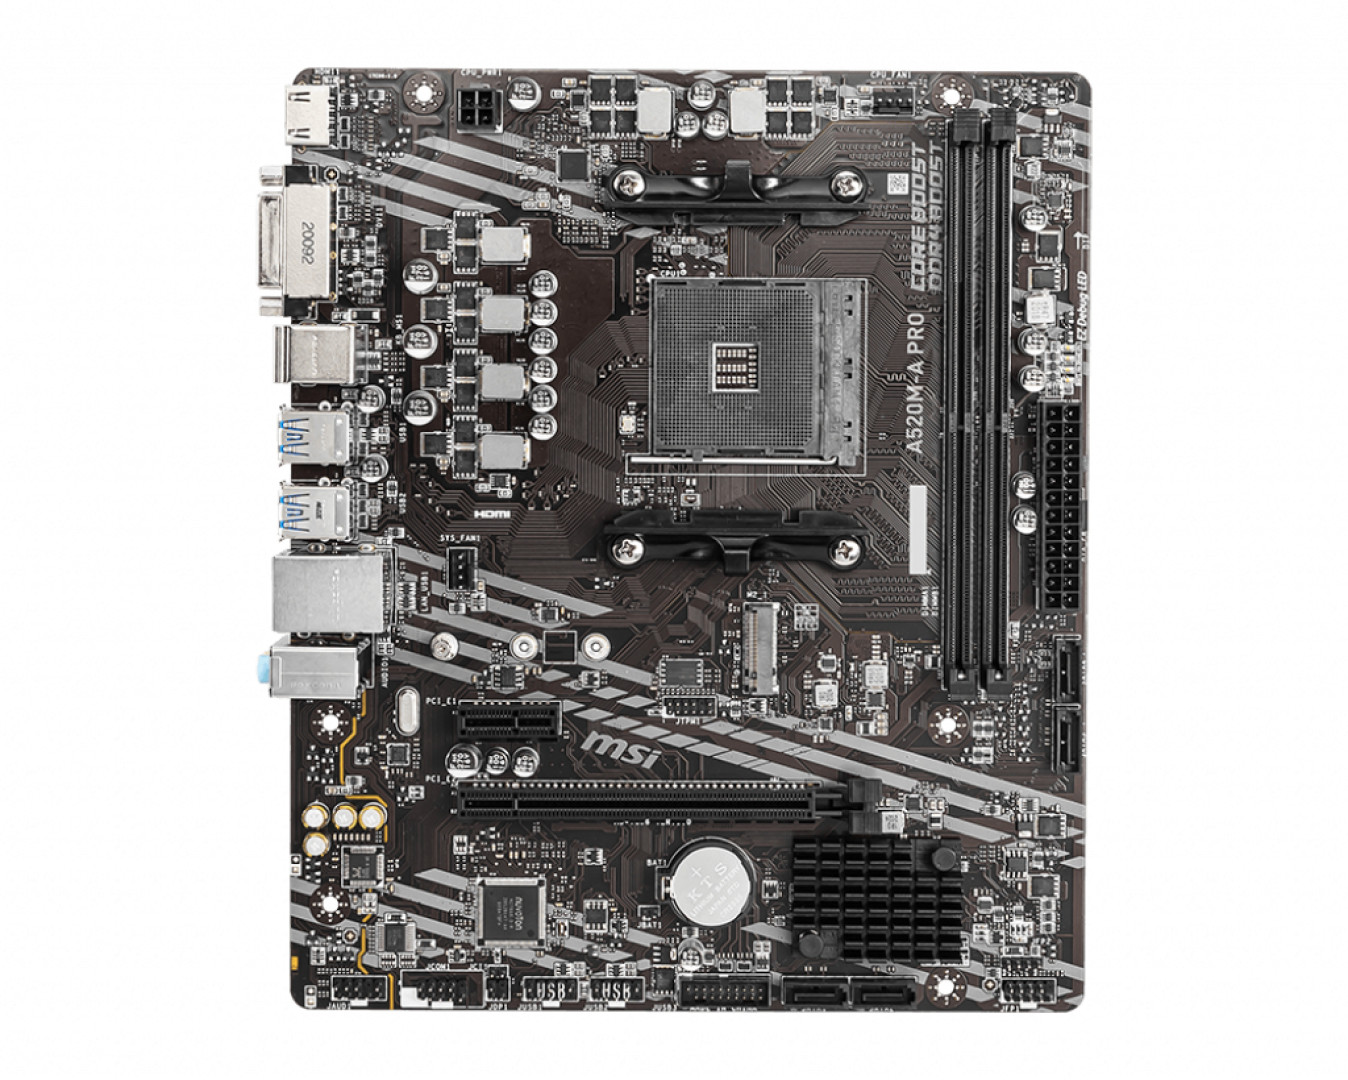 MSI A520M-A PRO scheda madre AMD A520 Socket AM4 micro ATX